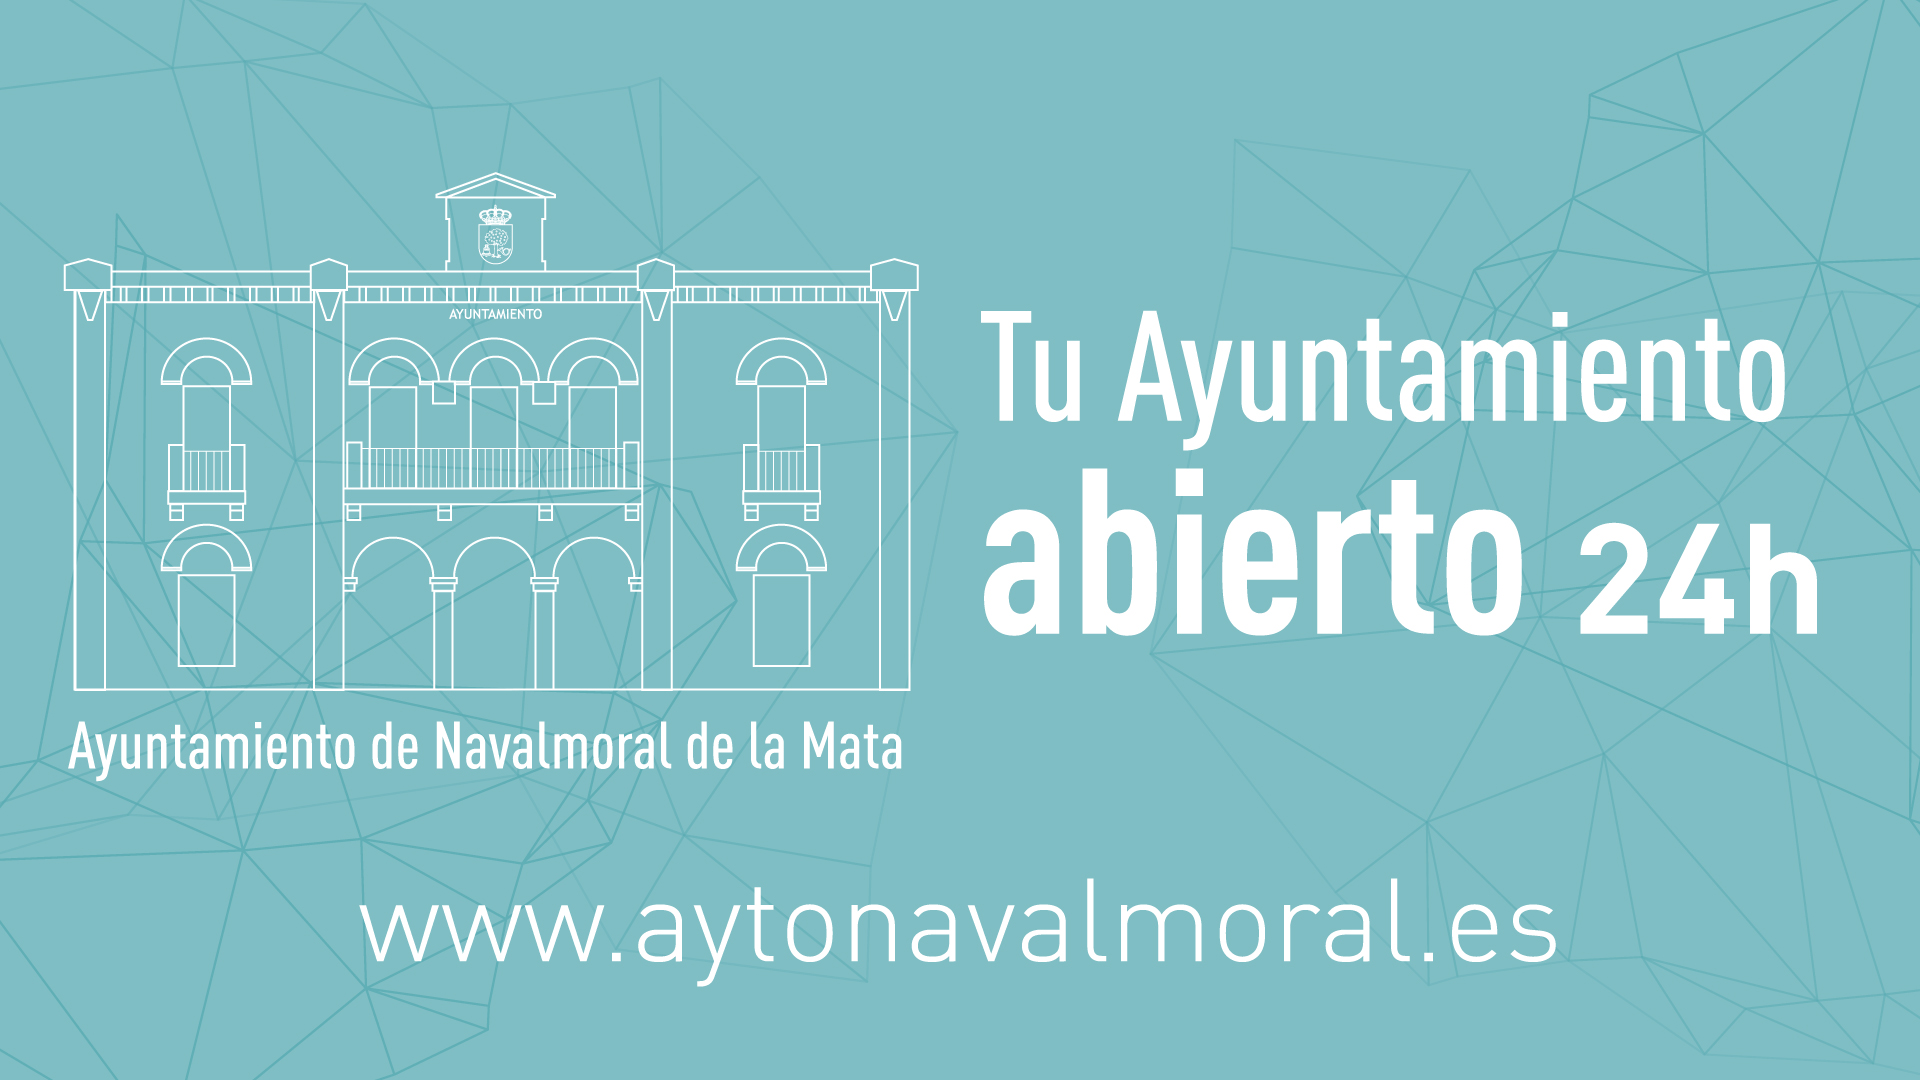 (c) Aytonavalmoral.es